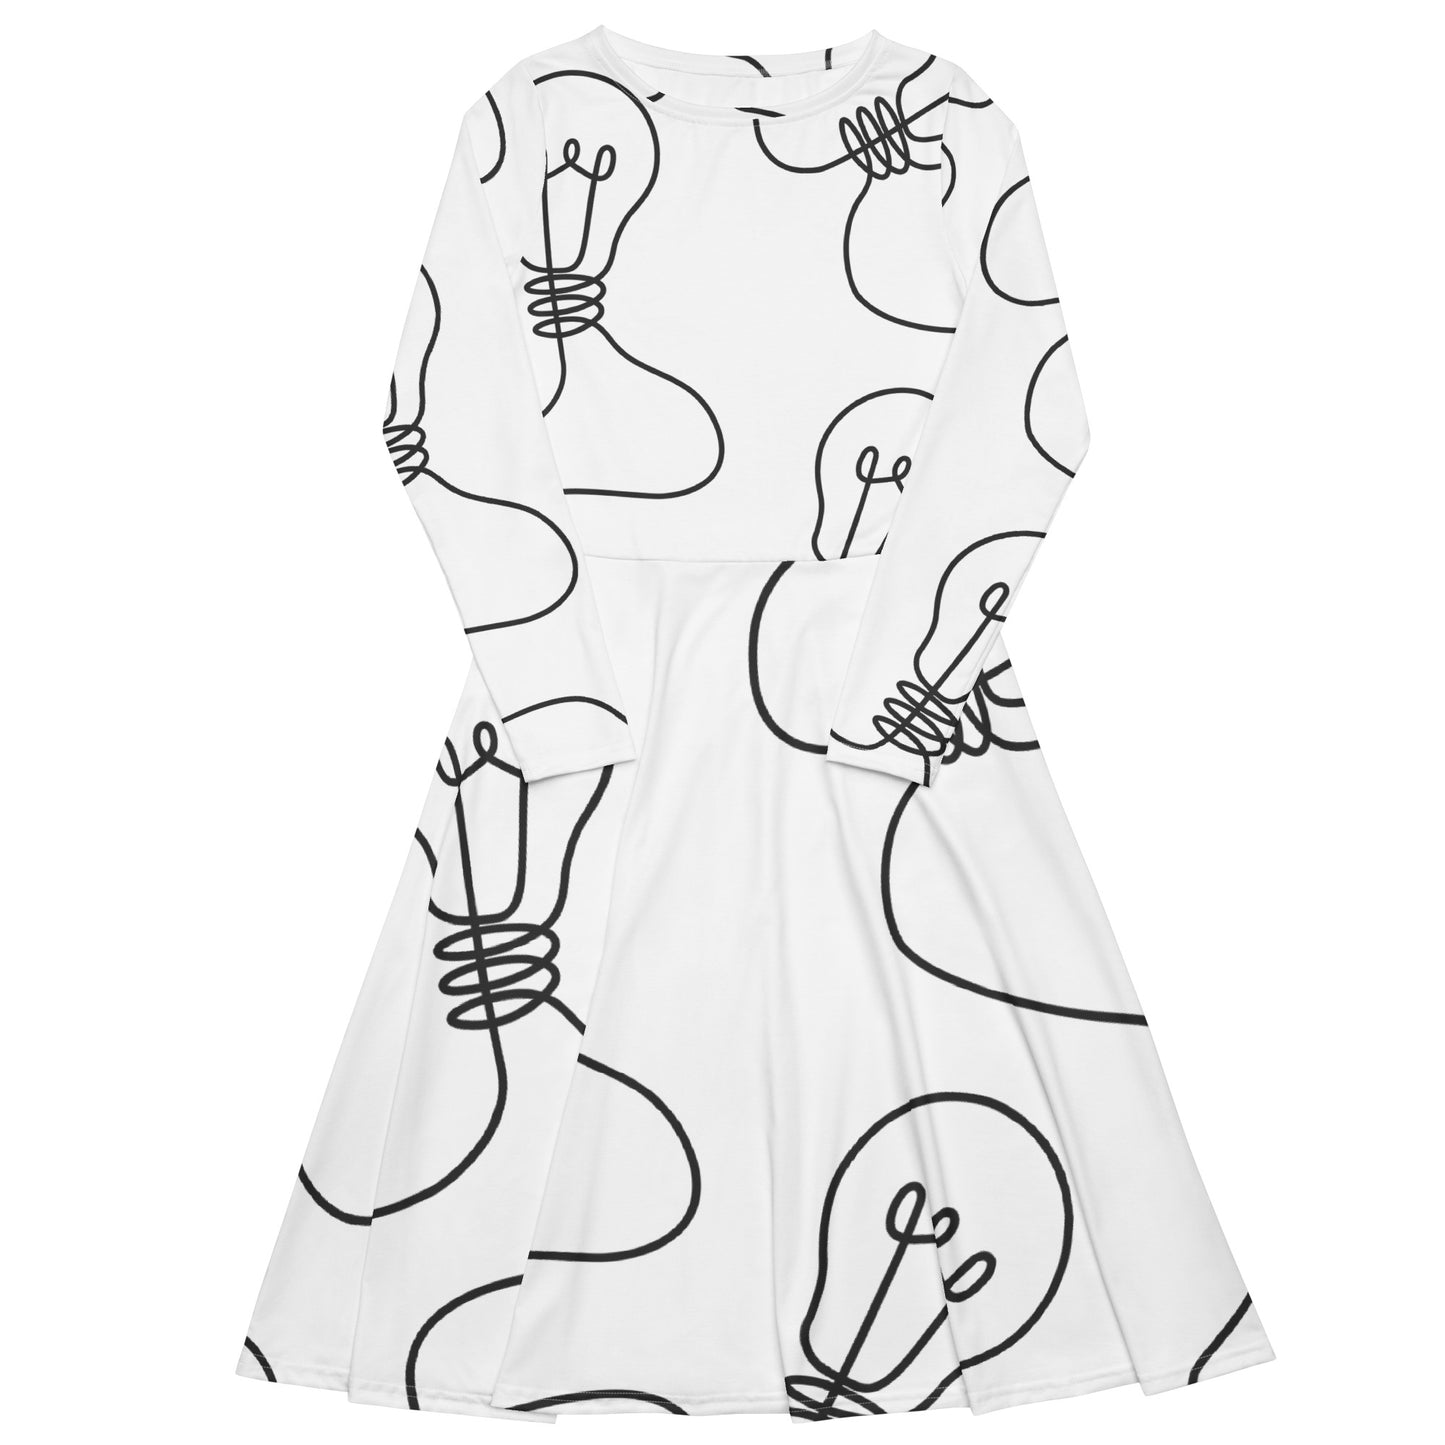 "Lamps" patterned long dress